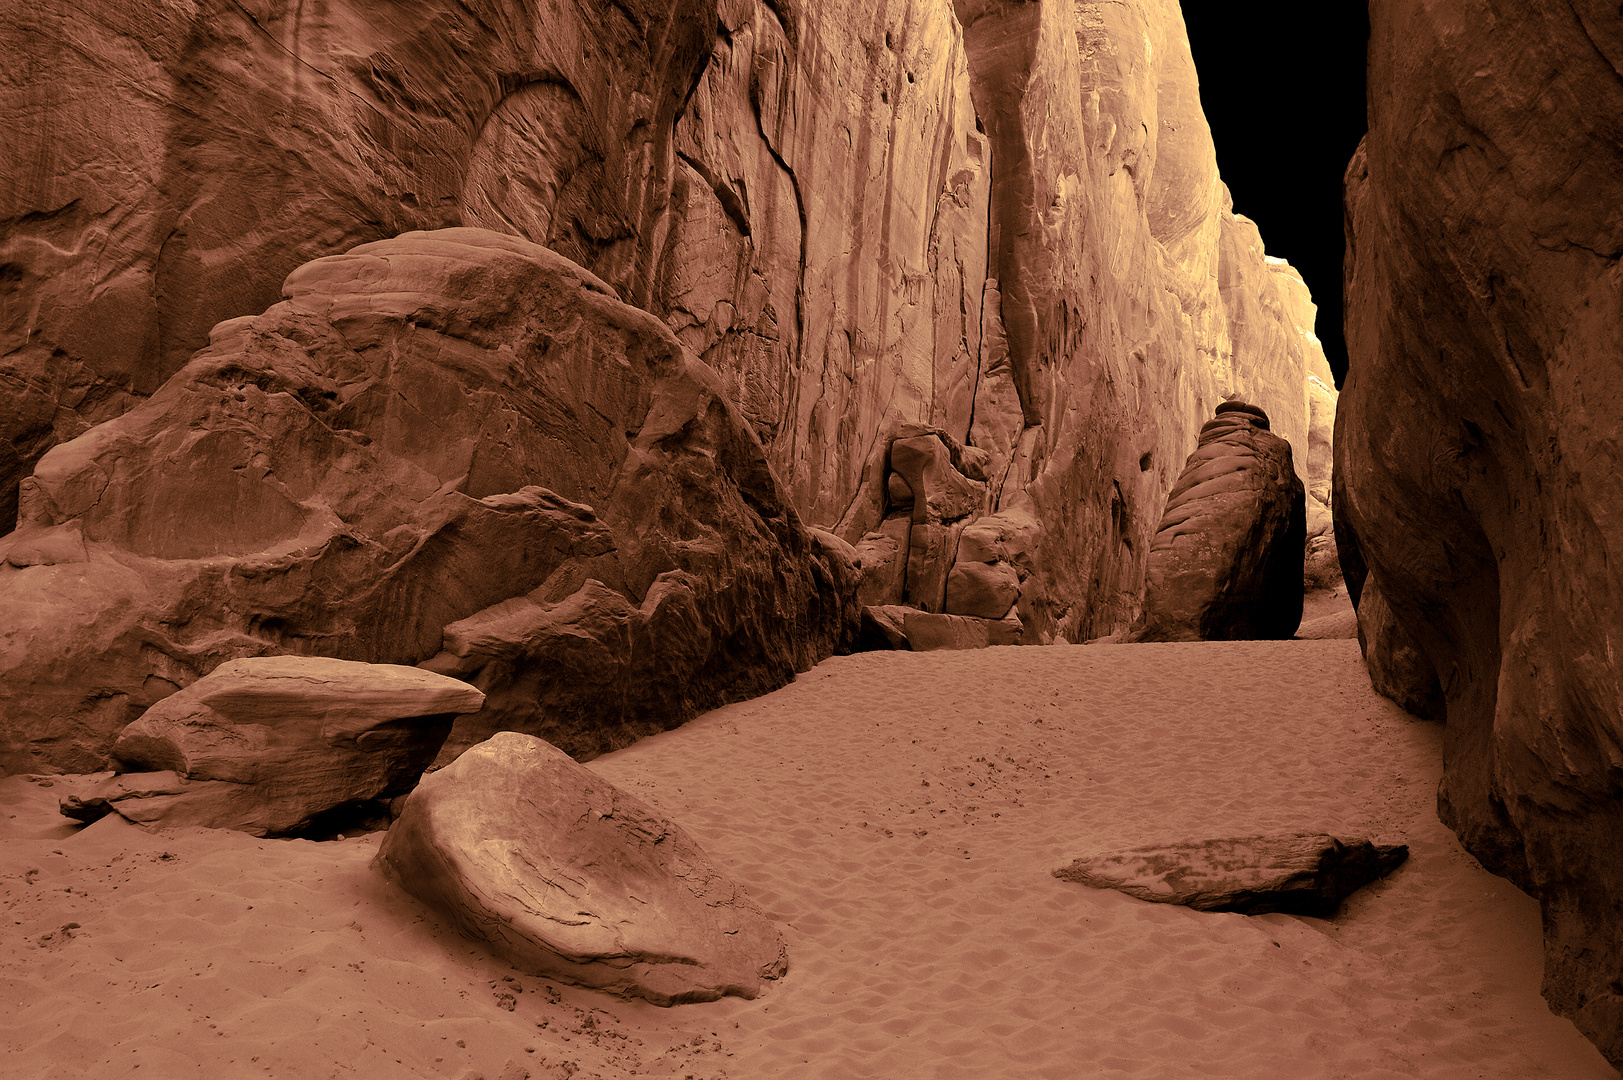 Sand Dune Arches, als wär's am Meer